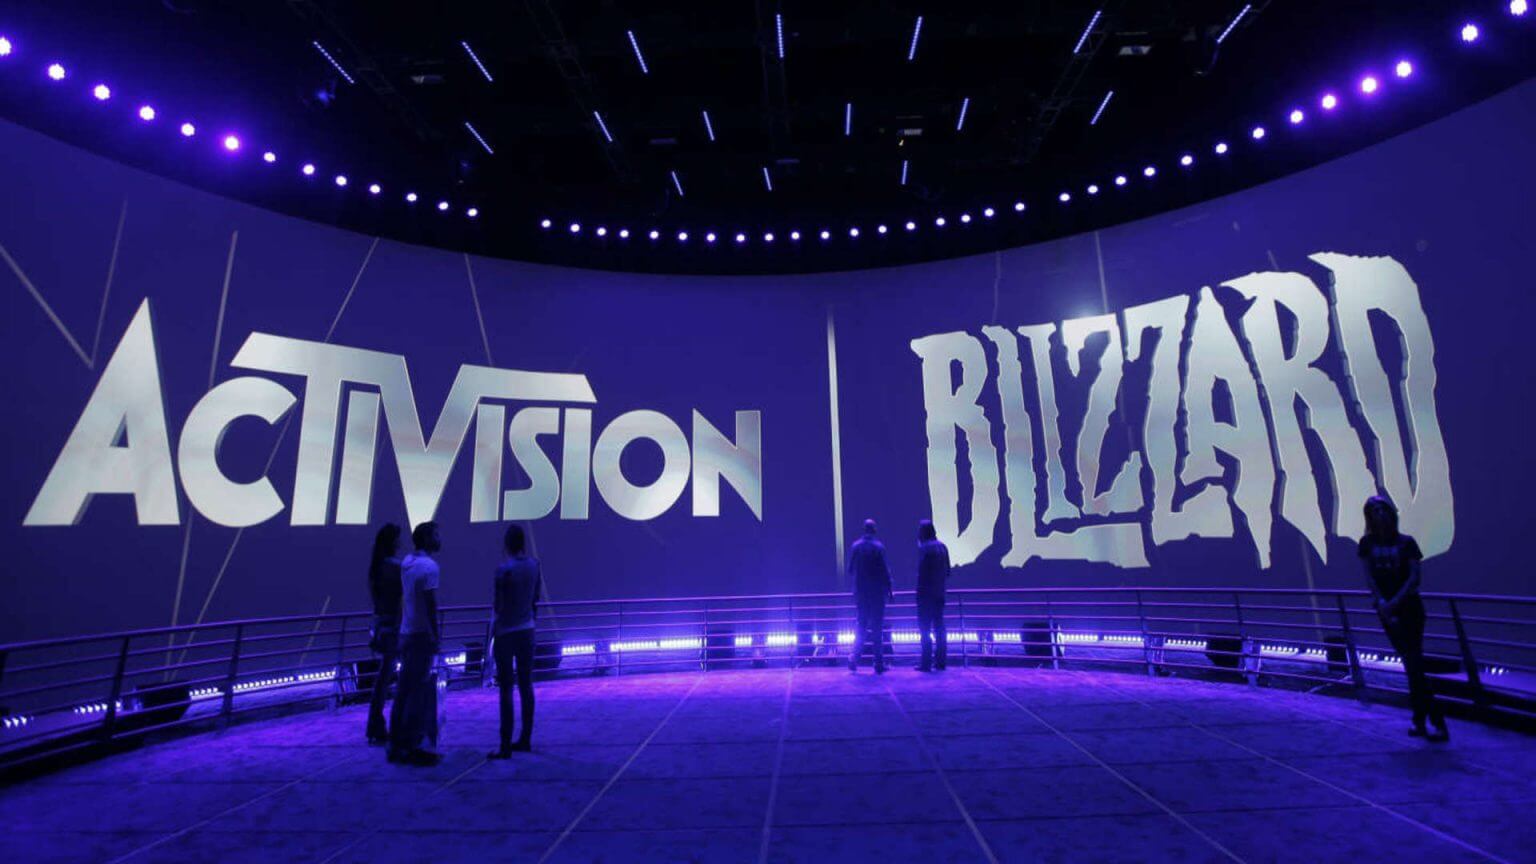 Activision Blizzard Sued